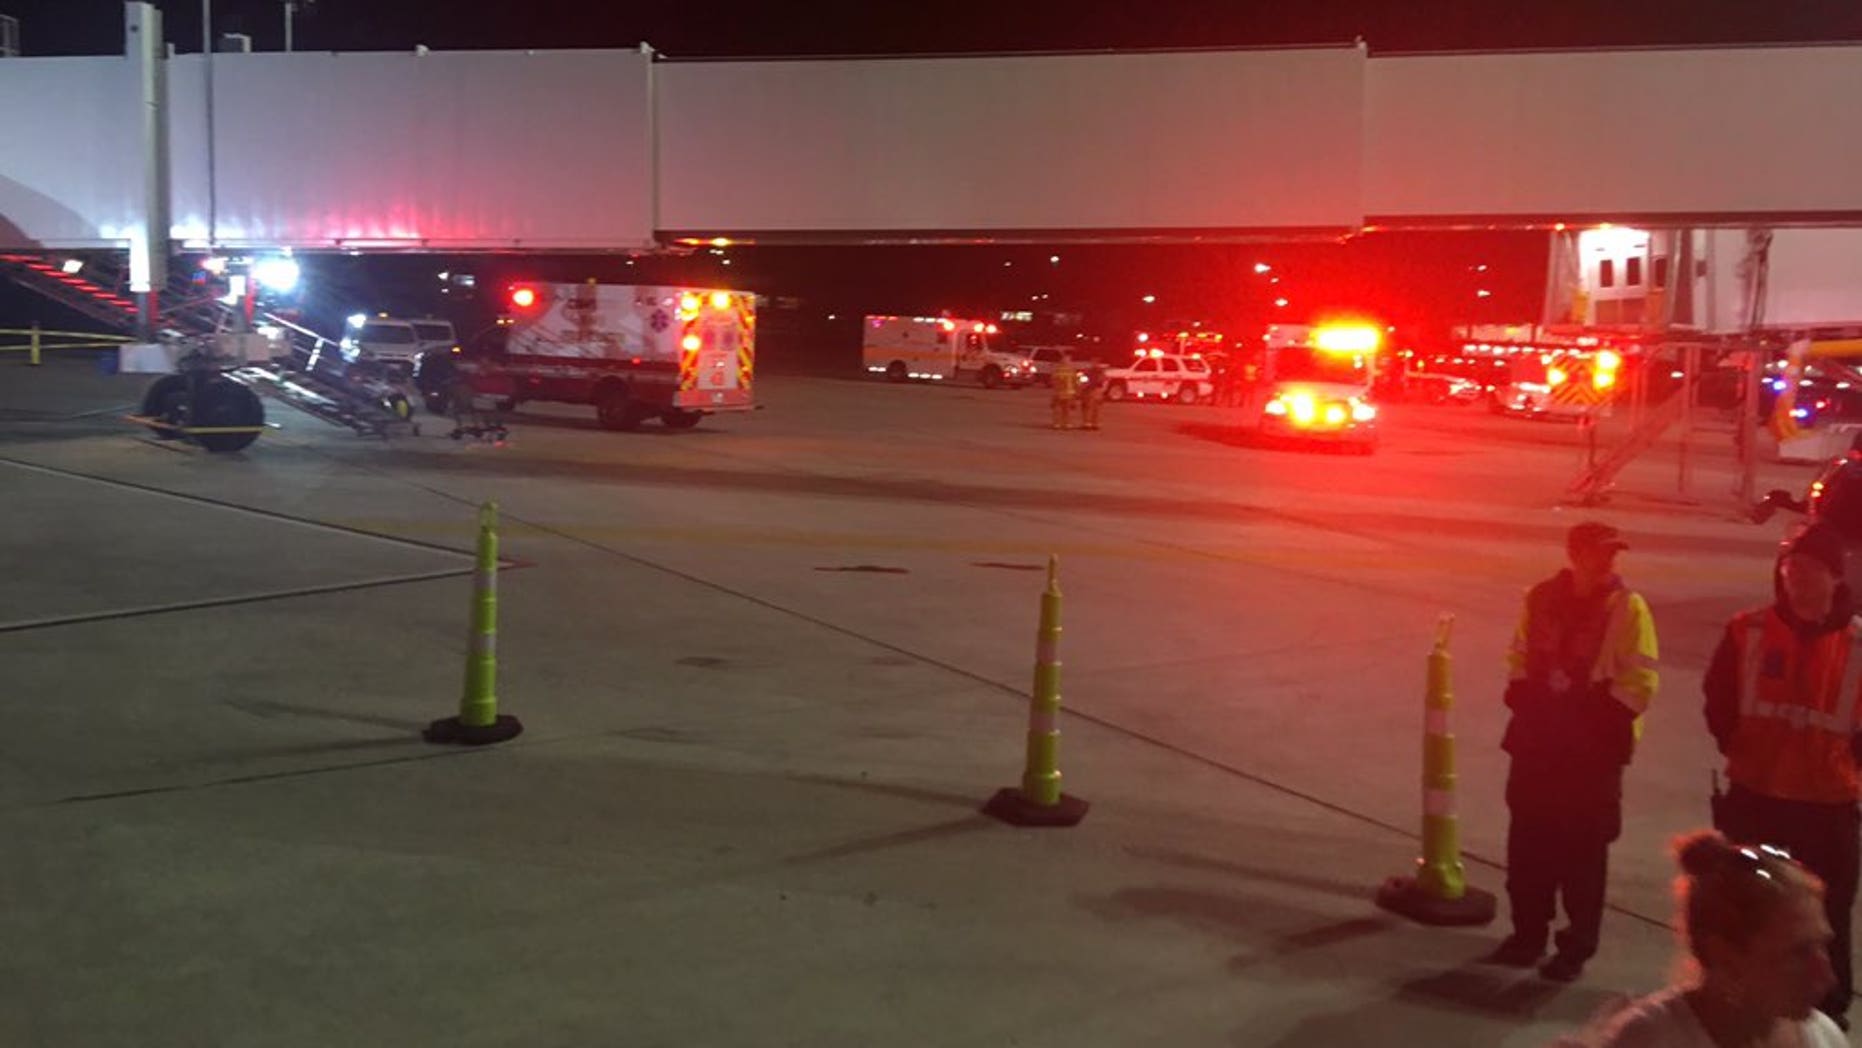 Faulty bracket found on jet bridge at Baltimore airport following incident that injured 6